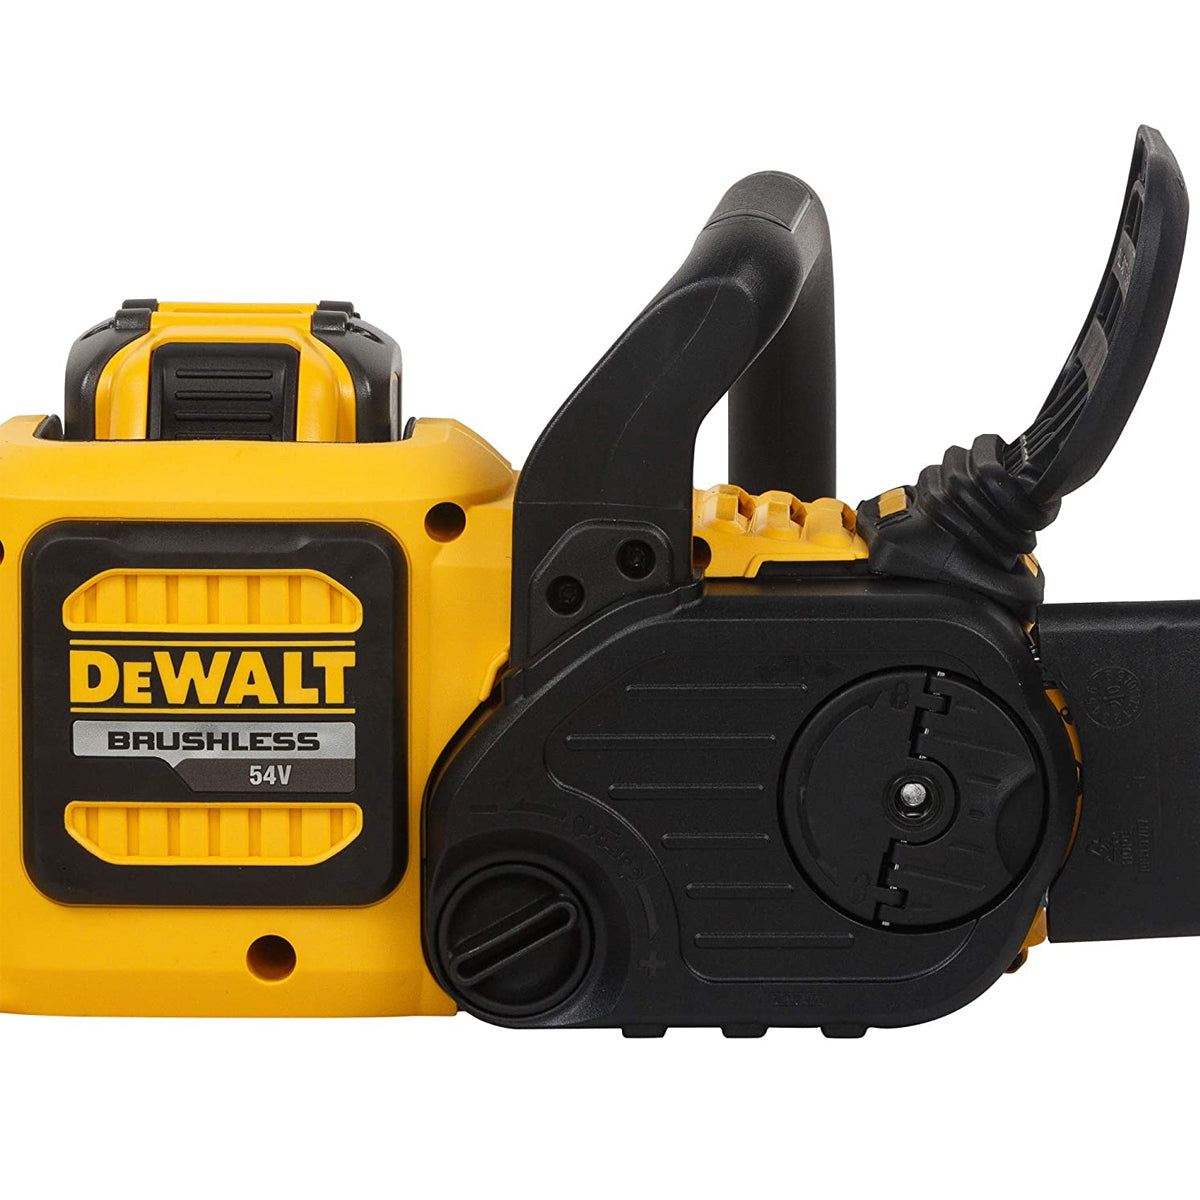 DeWalt DCM575X1 54V Flexvolt Brushless Chainsaw with 1 x 9.0Ah Battery & Charger